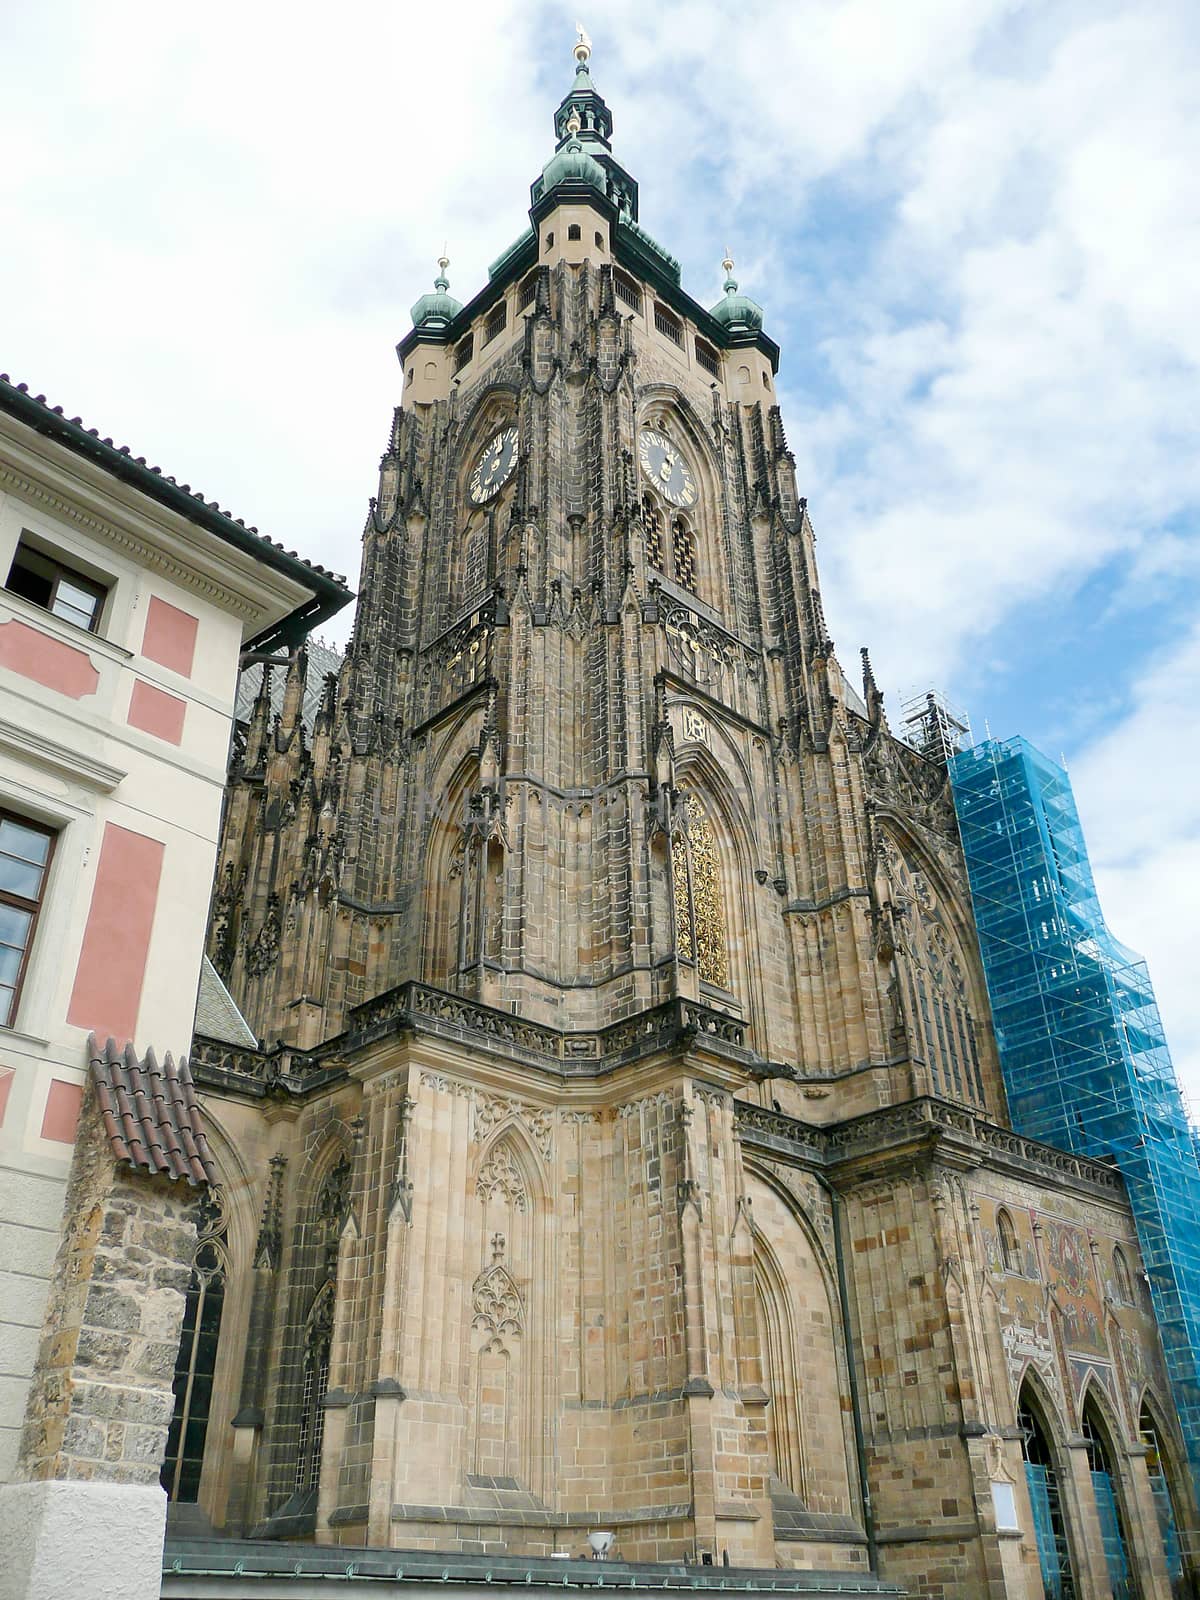 Facade of St Vitus Cathedral, Prague by marcorubino